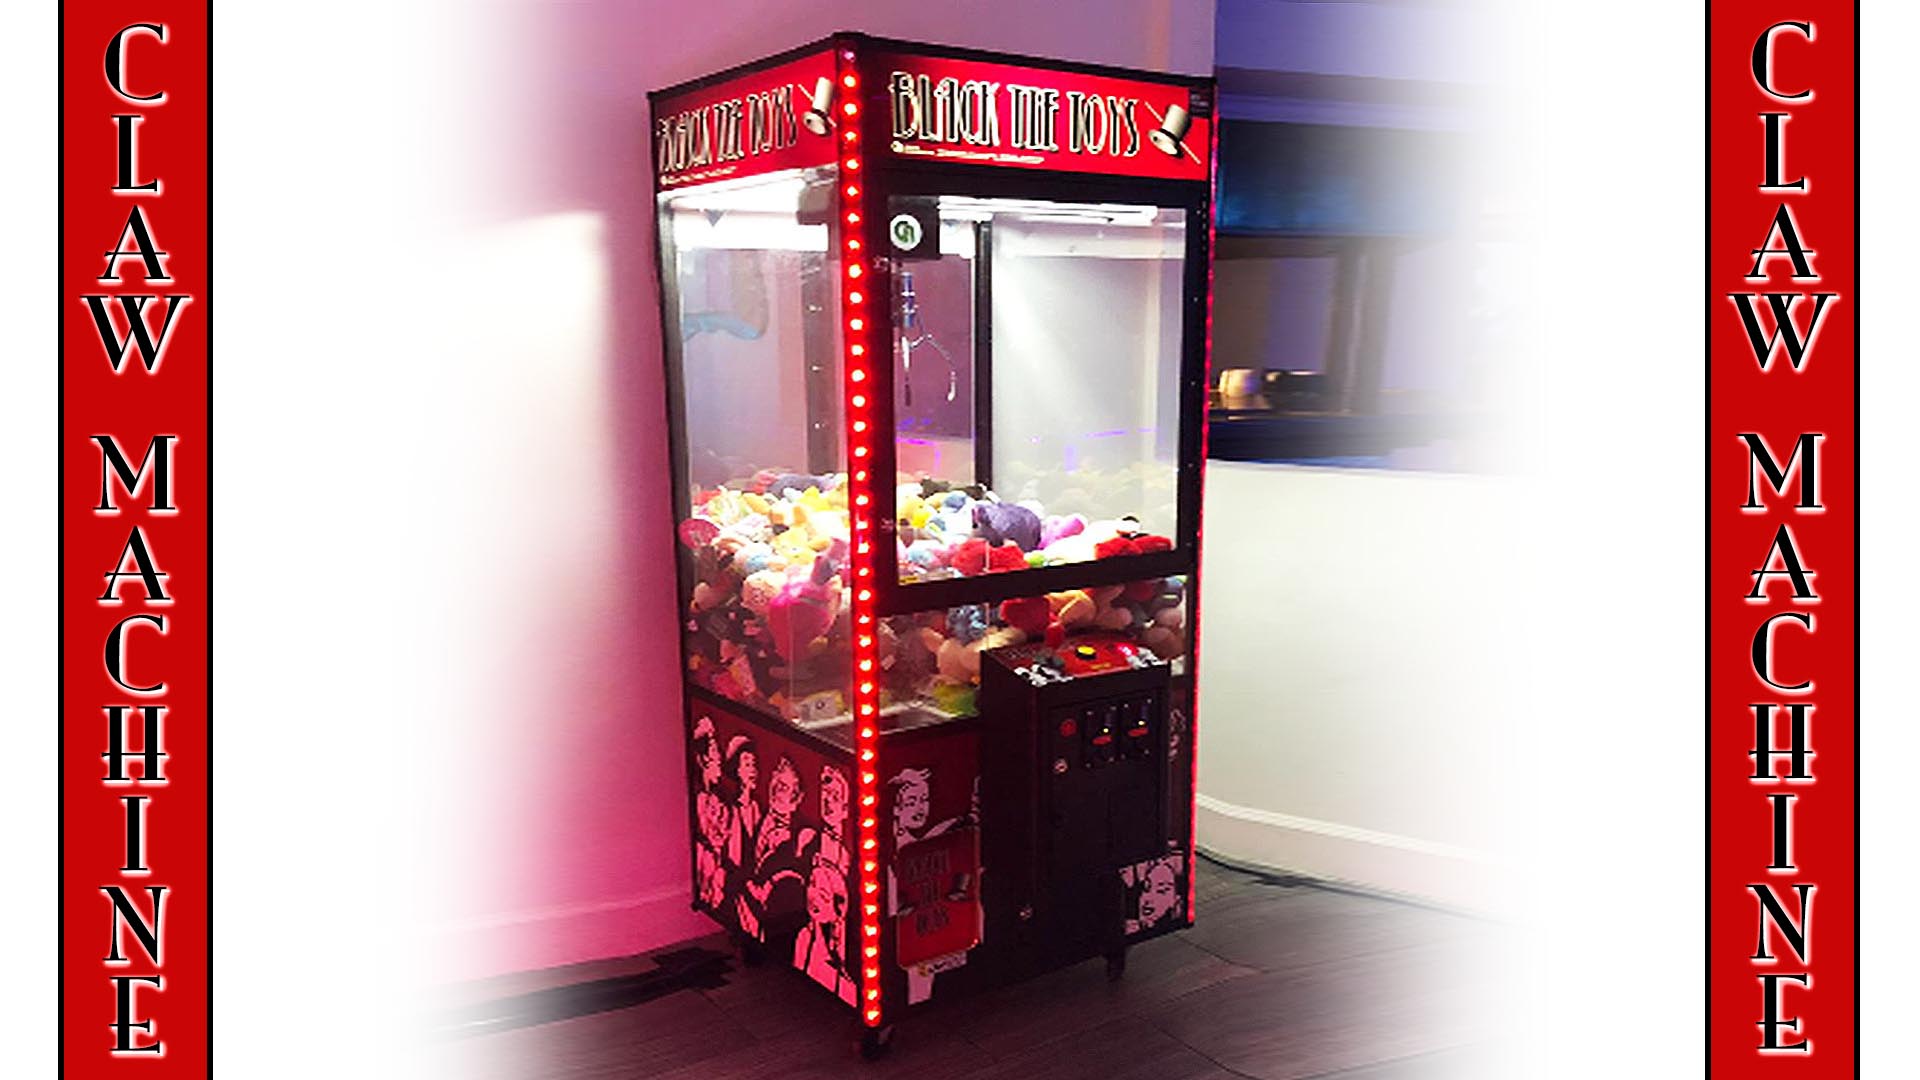 Orlando, Florida arcade game rentals